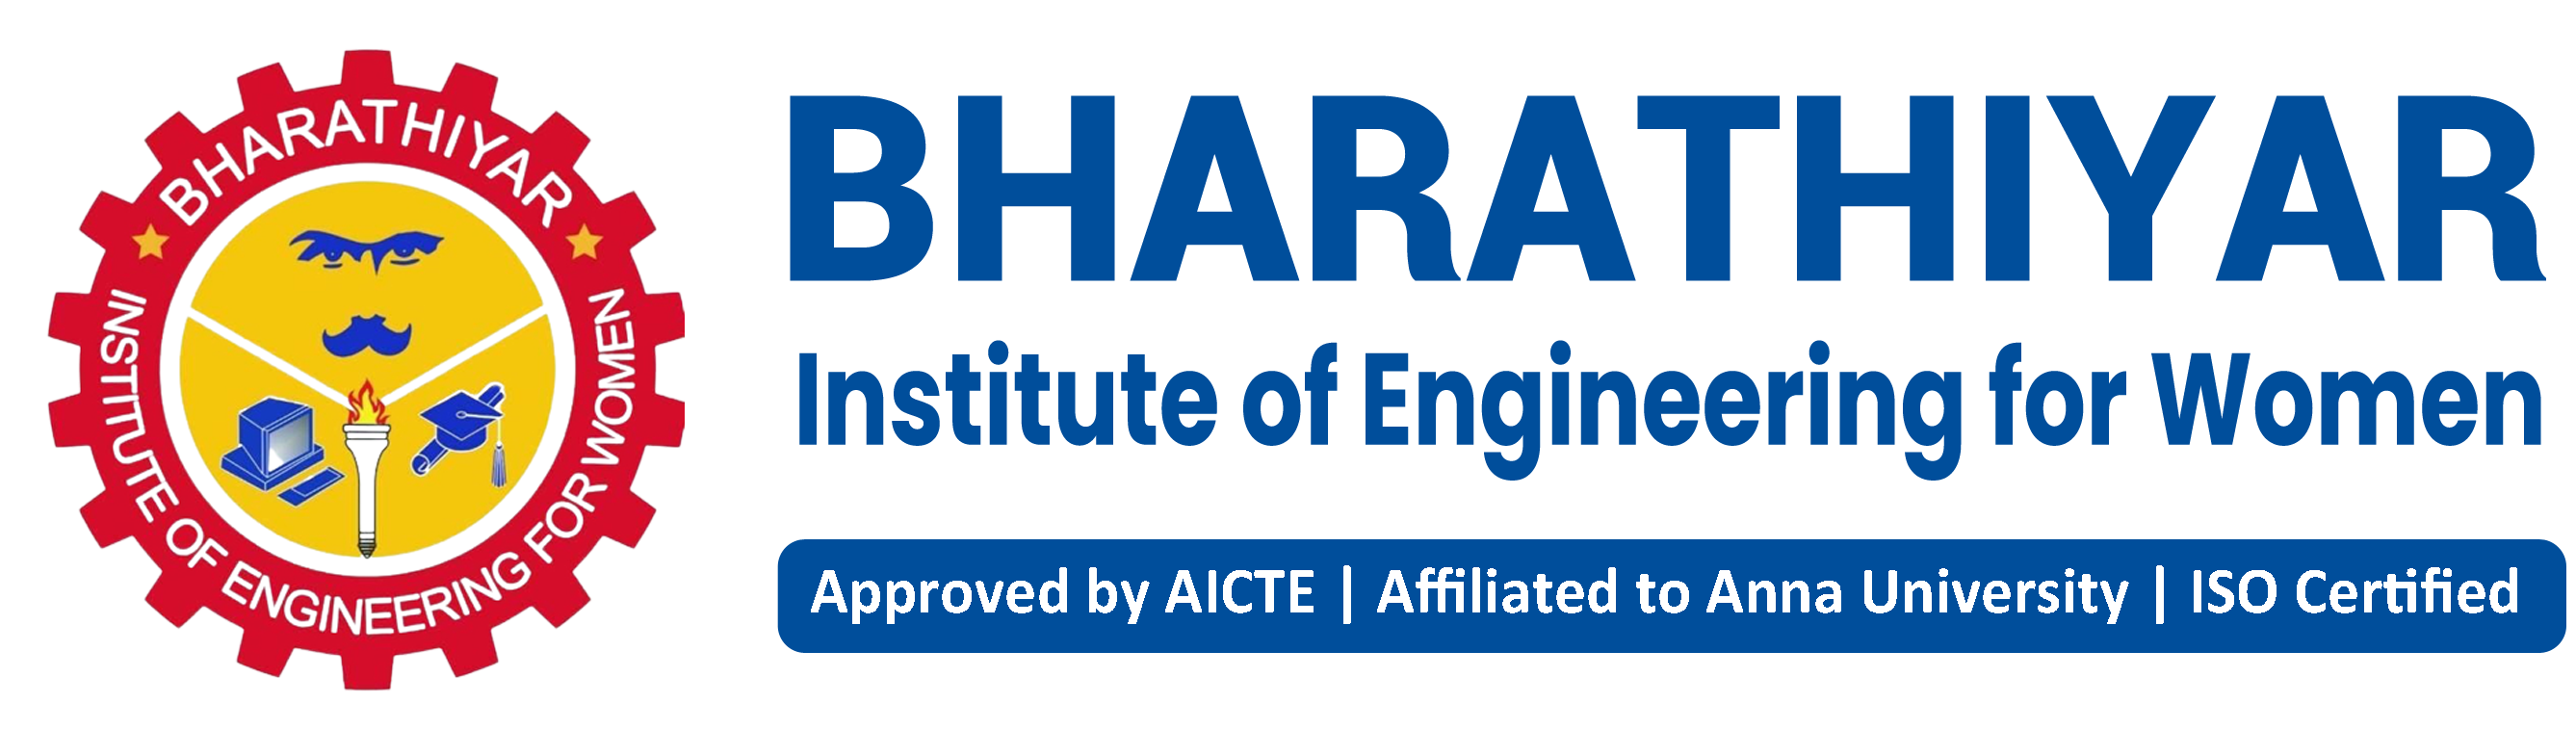 Bharathiyar Institute of Engineering for Women